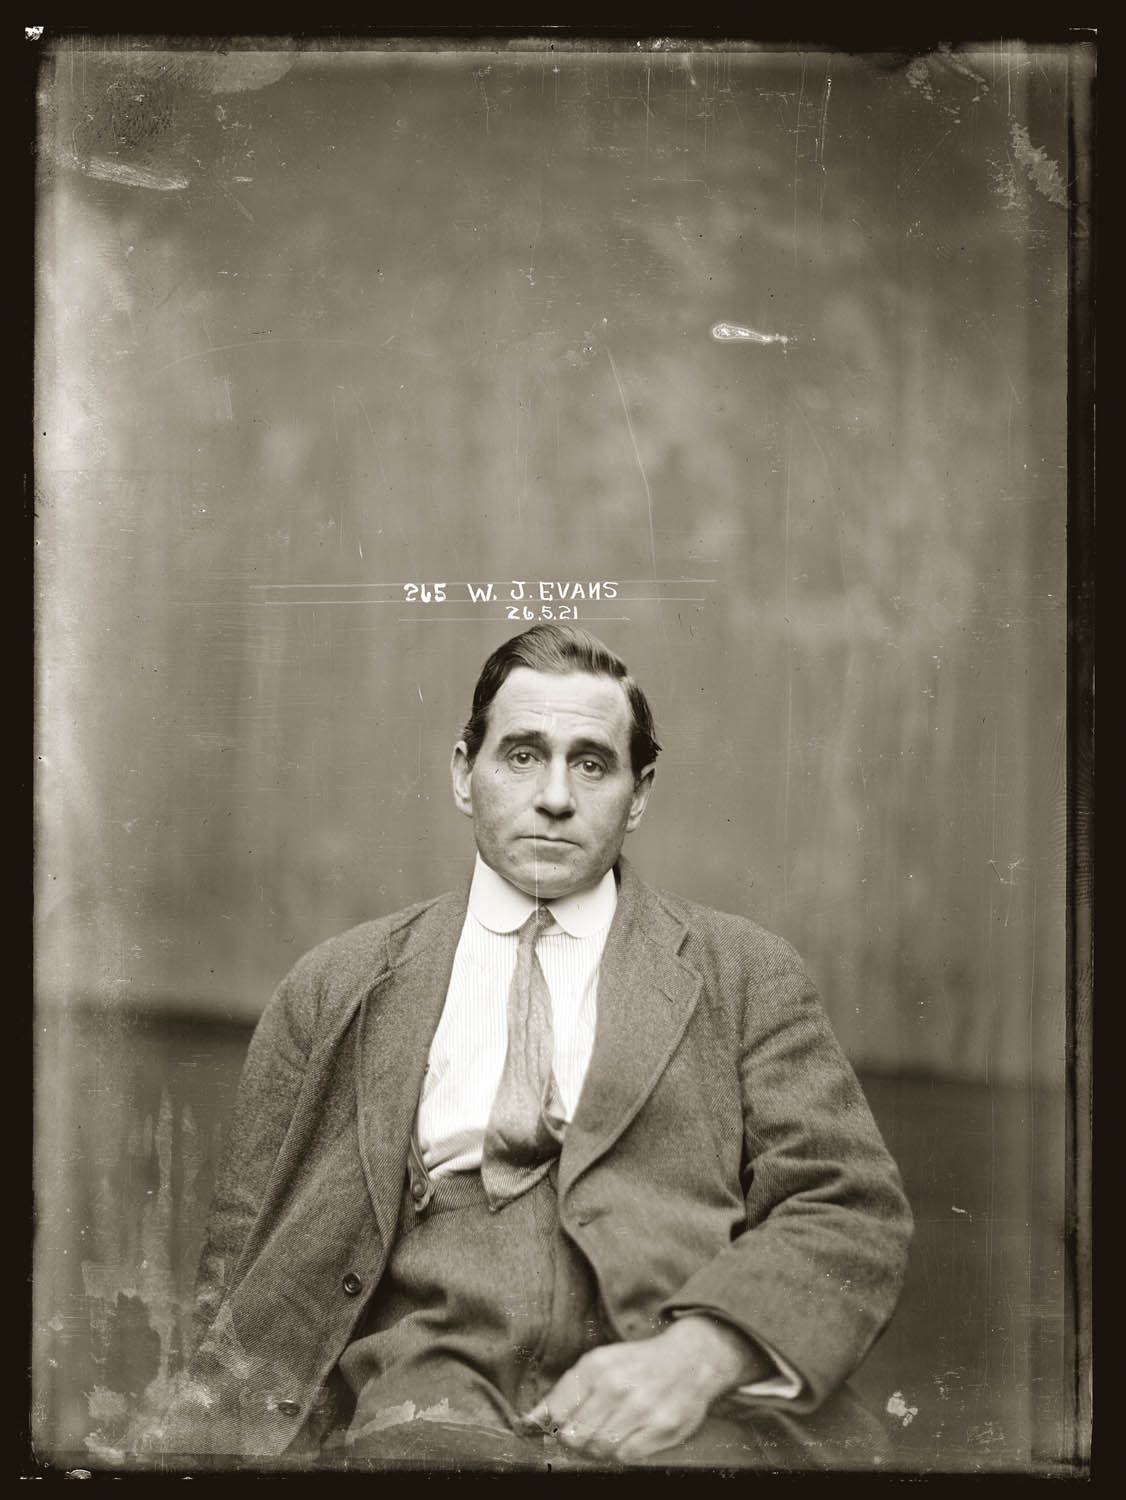 Mug shot of William Joseph  Evans taken on 26 May 1921, Central cells.